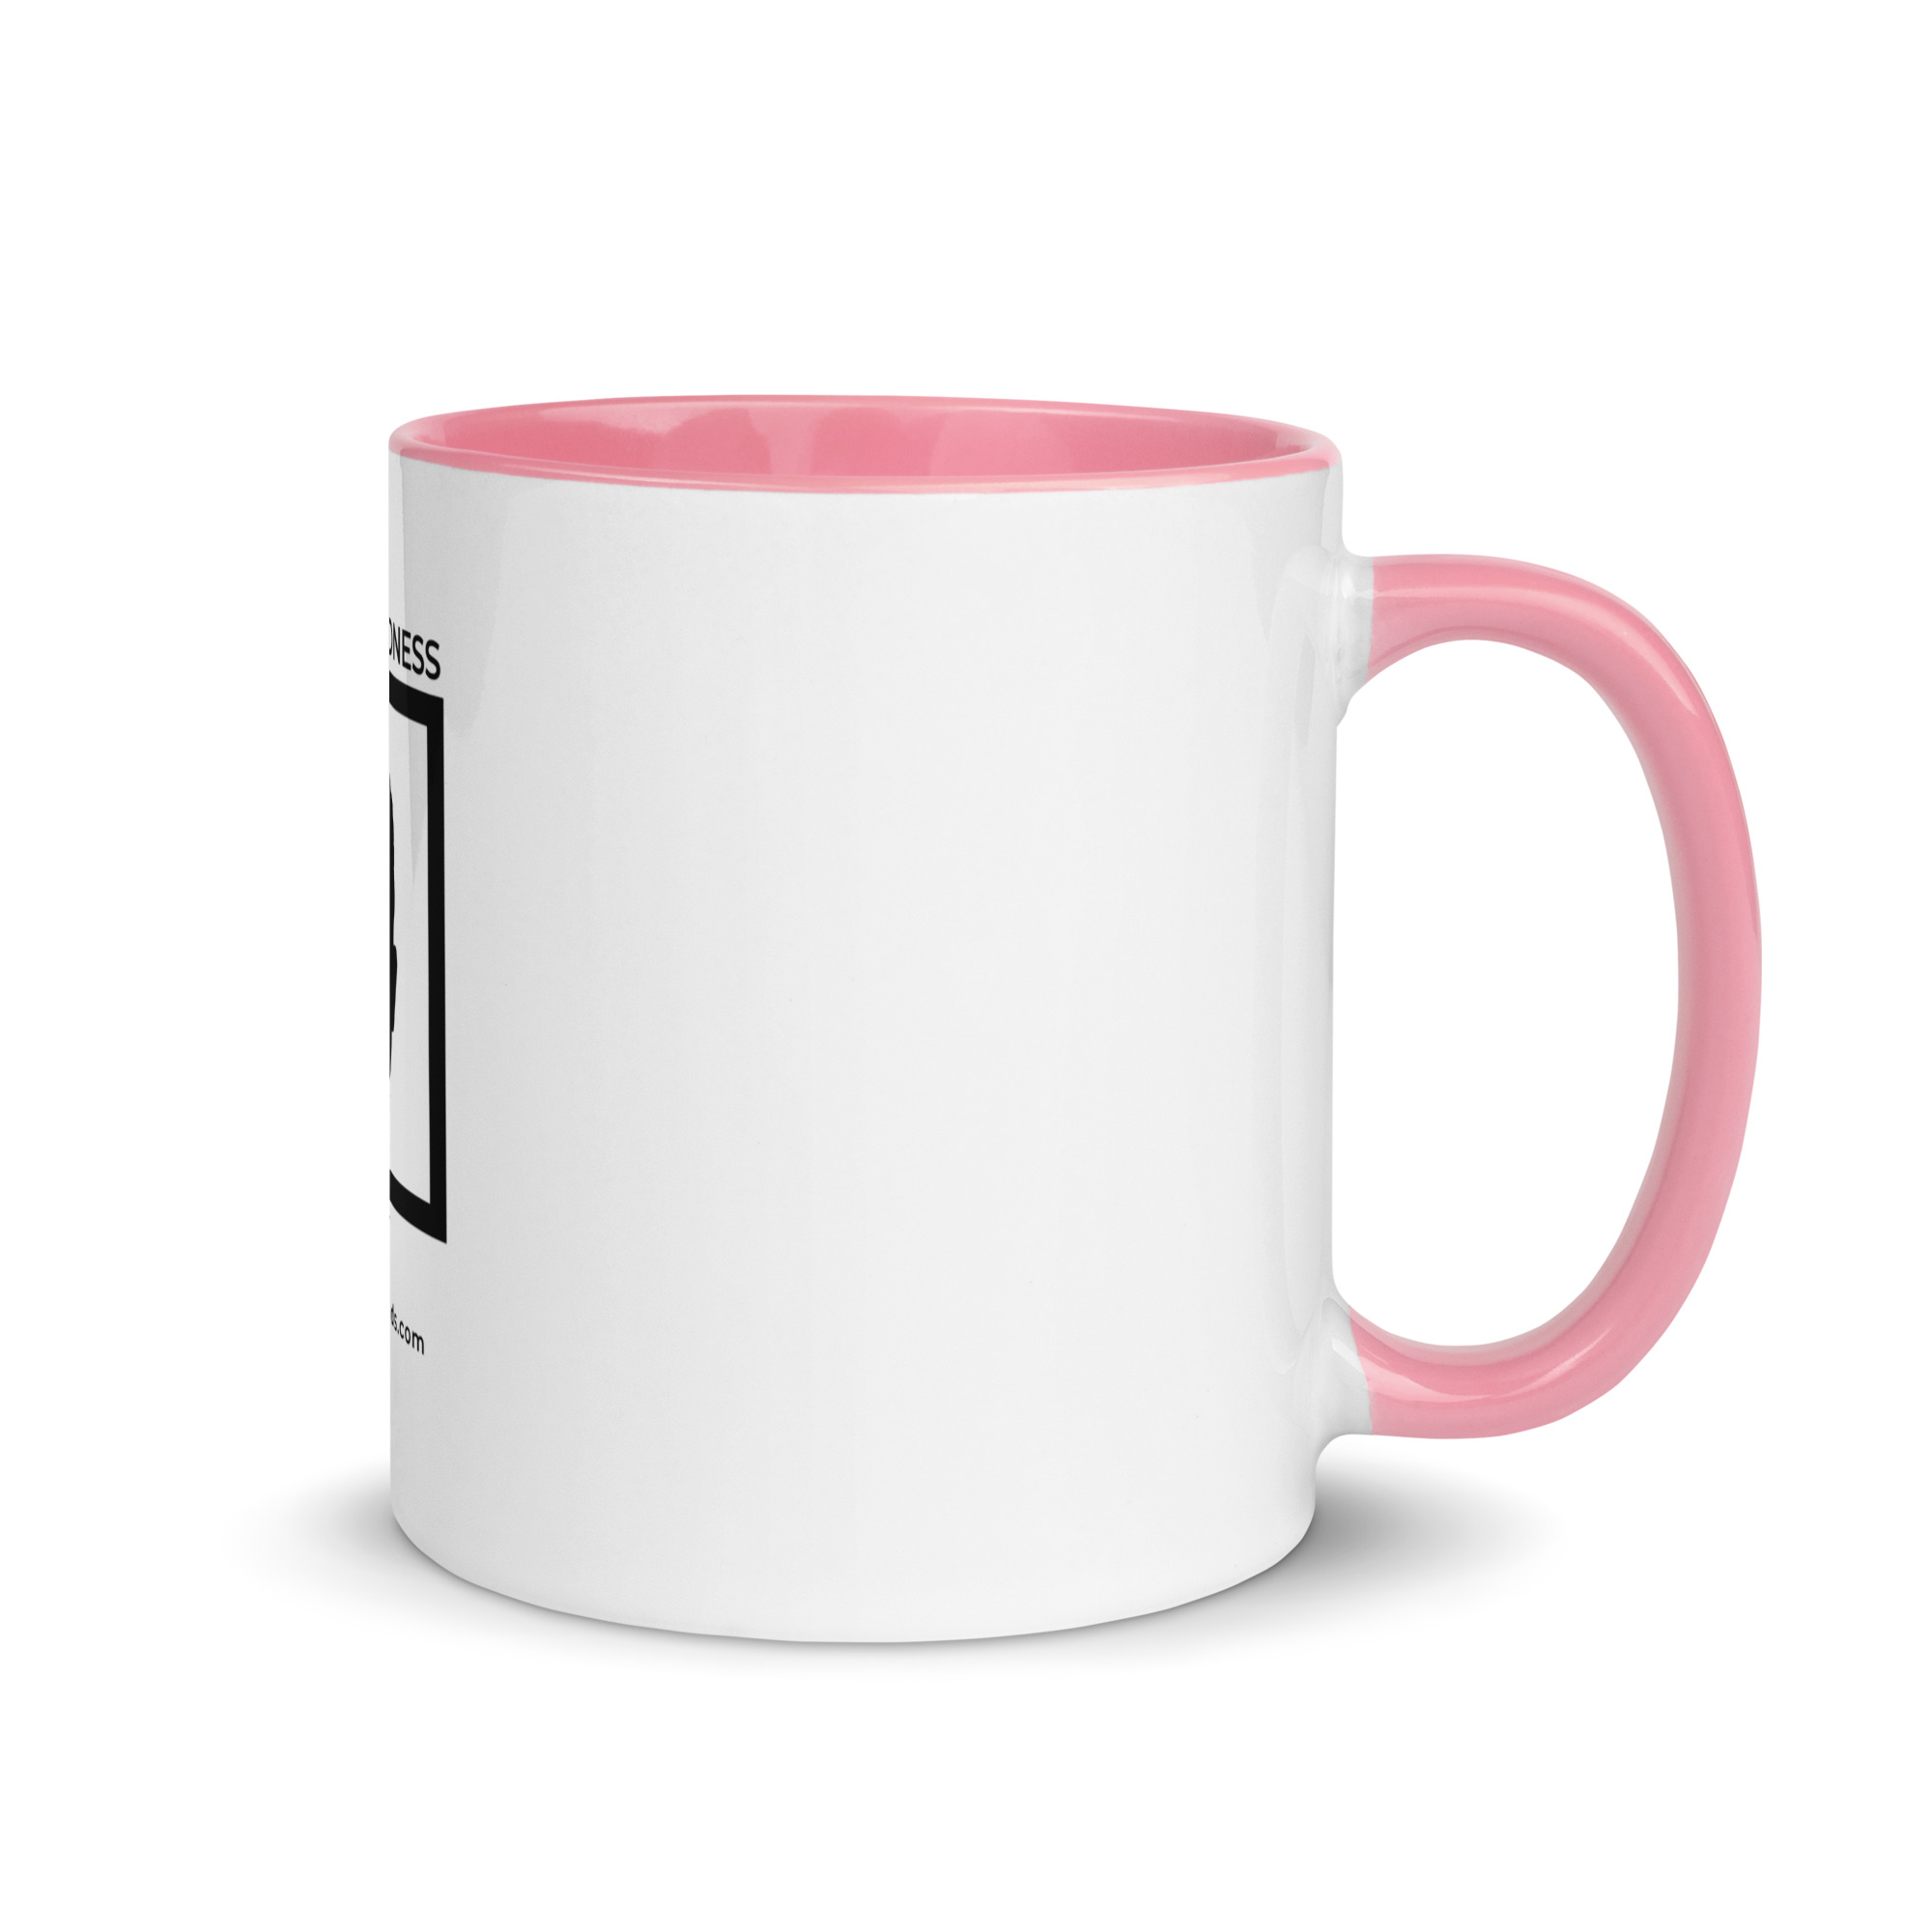 white-ceramic-mug-with-color-inside-pink-11-oz-right-6522a1a40424b.jpg